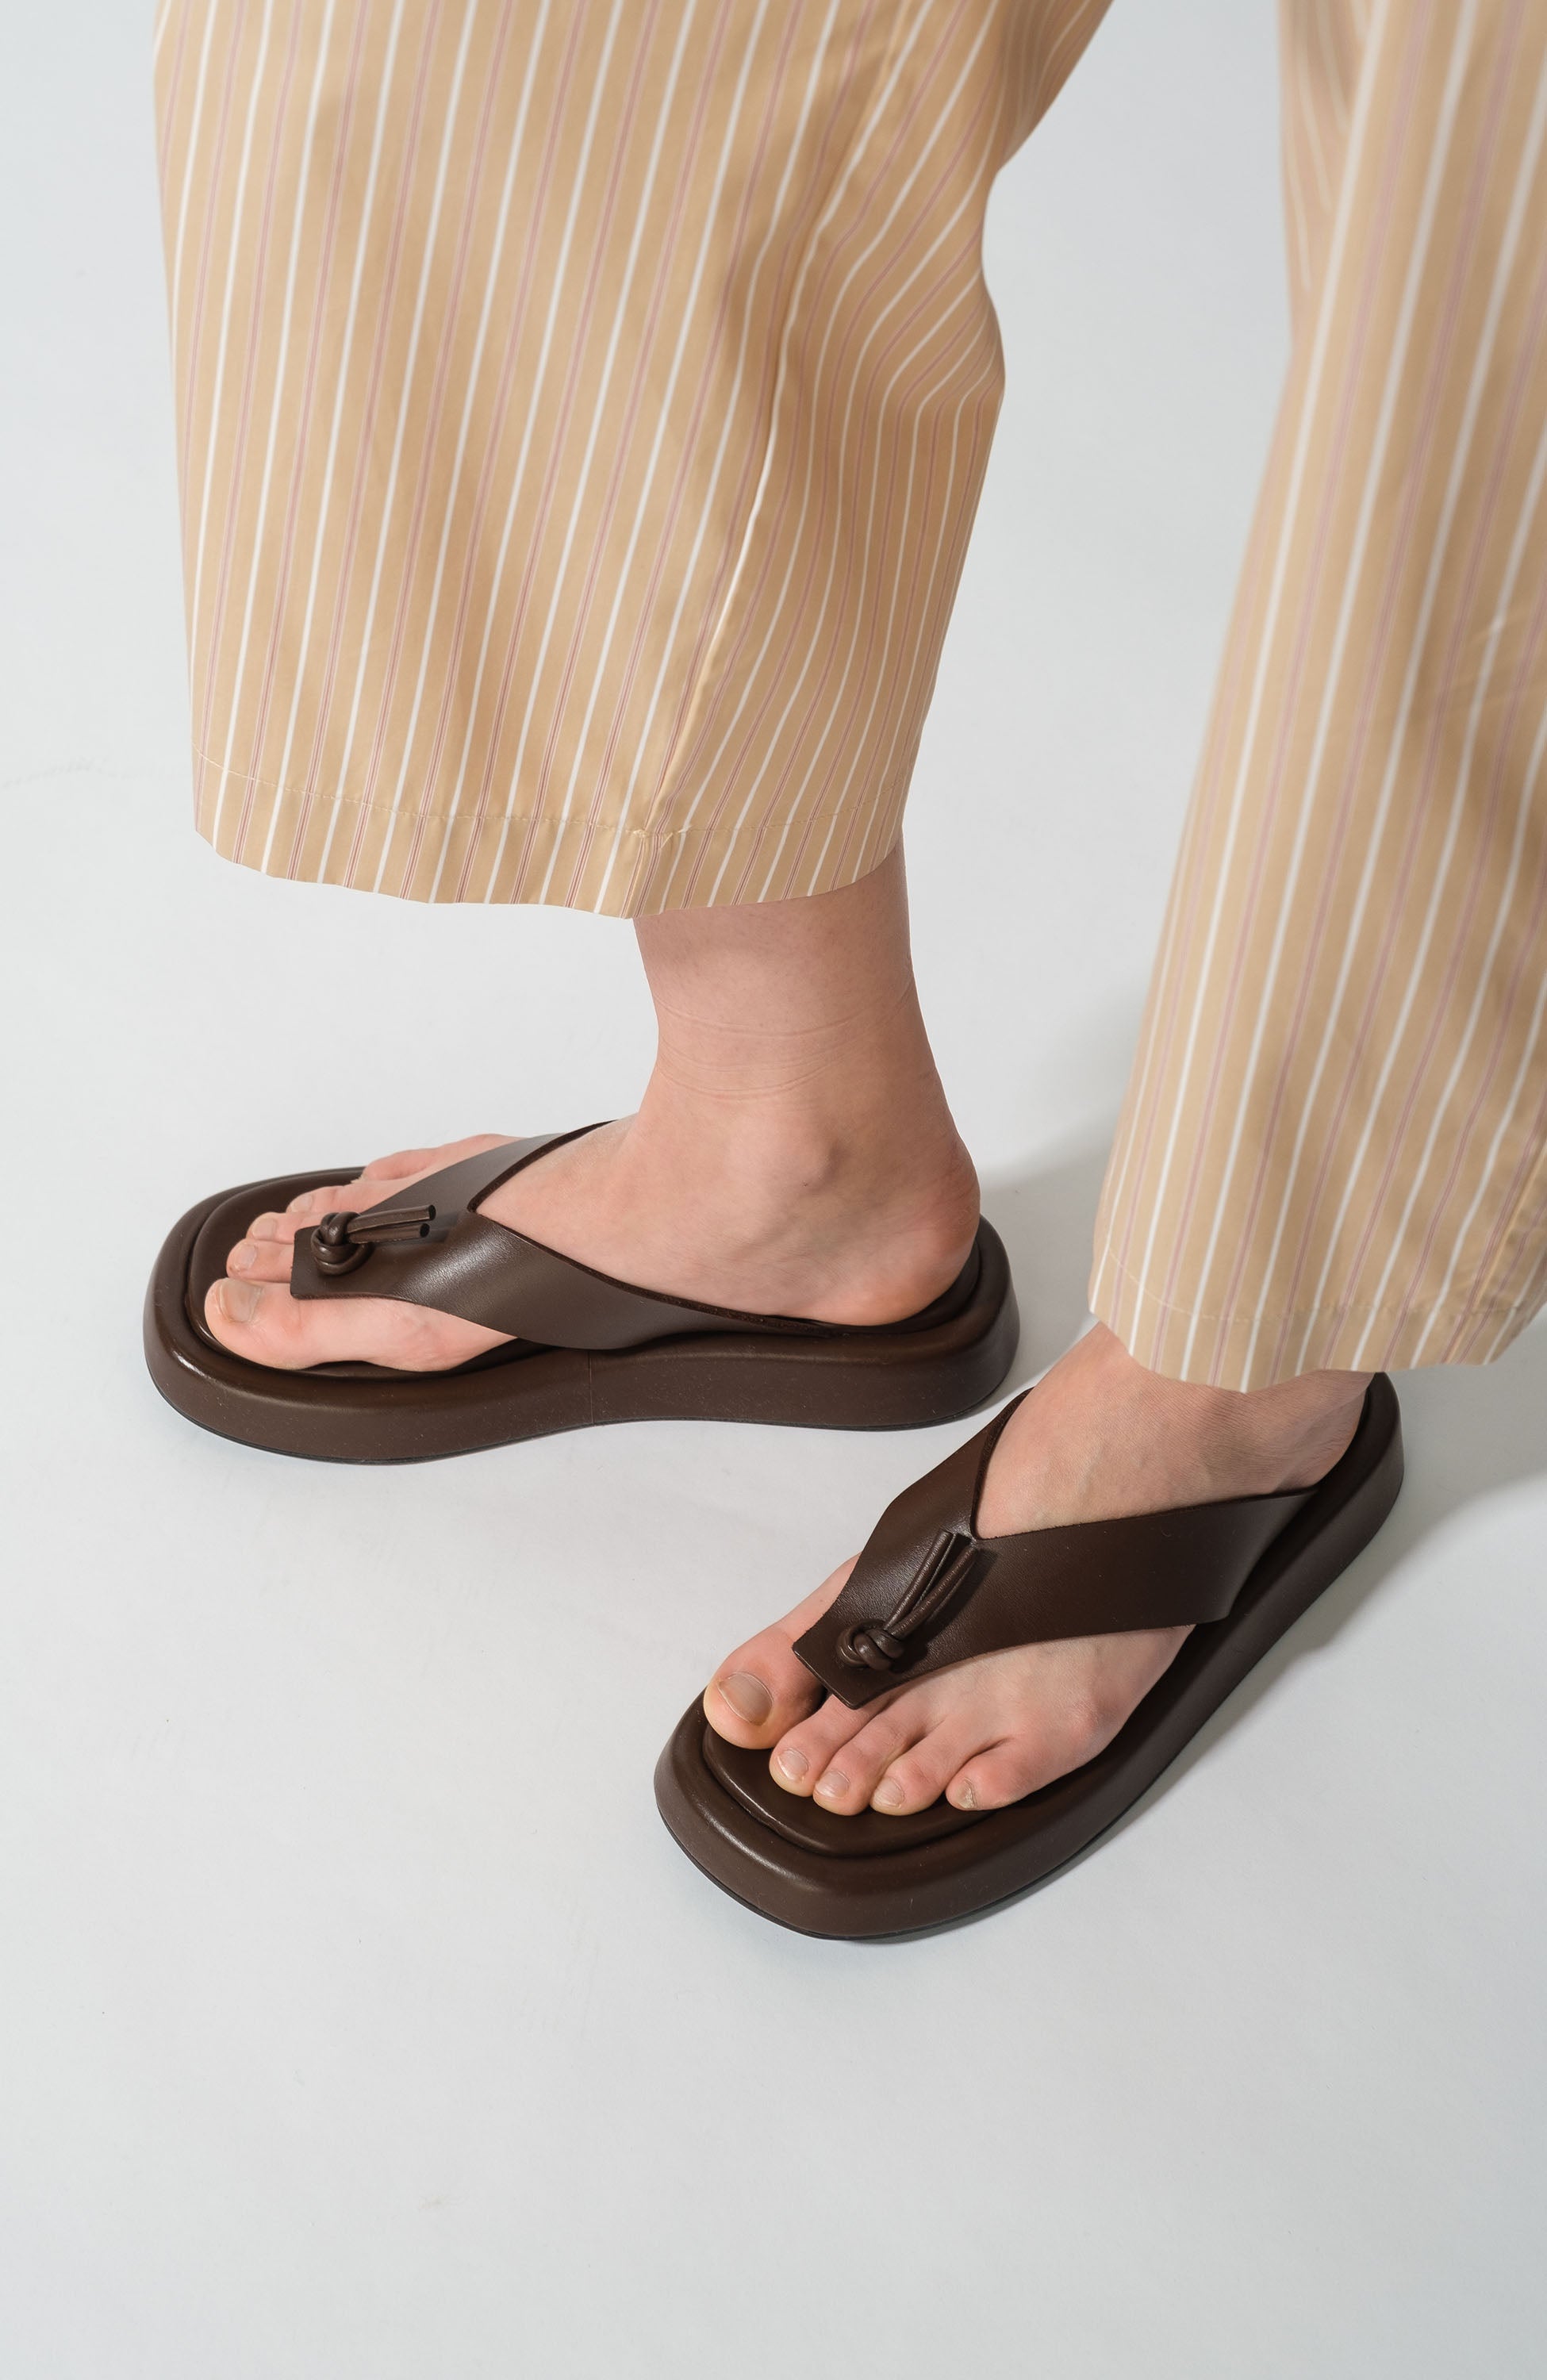 Leather Flip Flops For Women ERIKA CAVALLINI - Get Yours